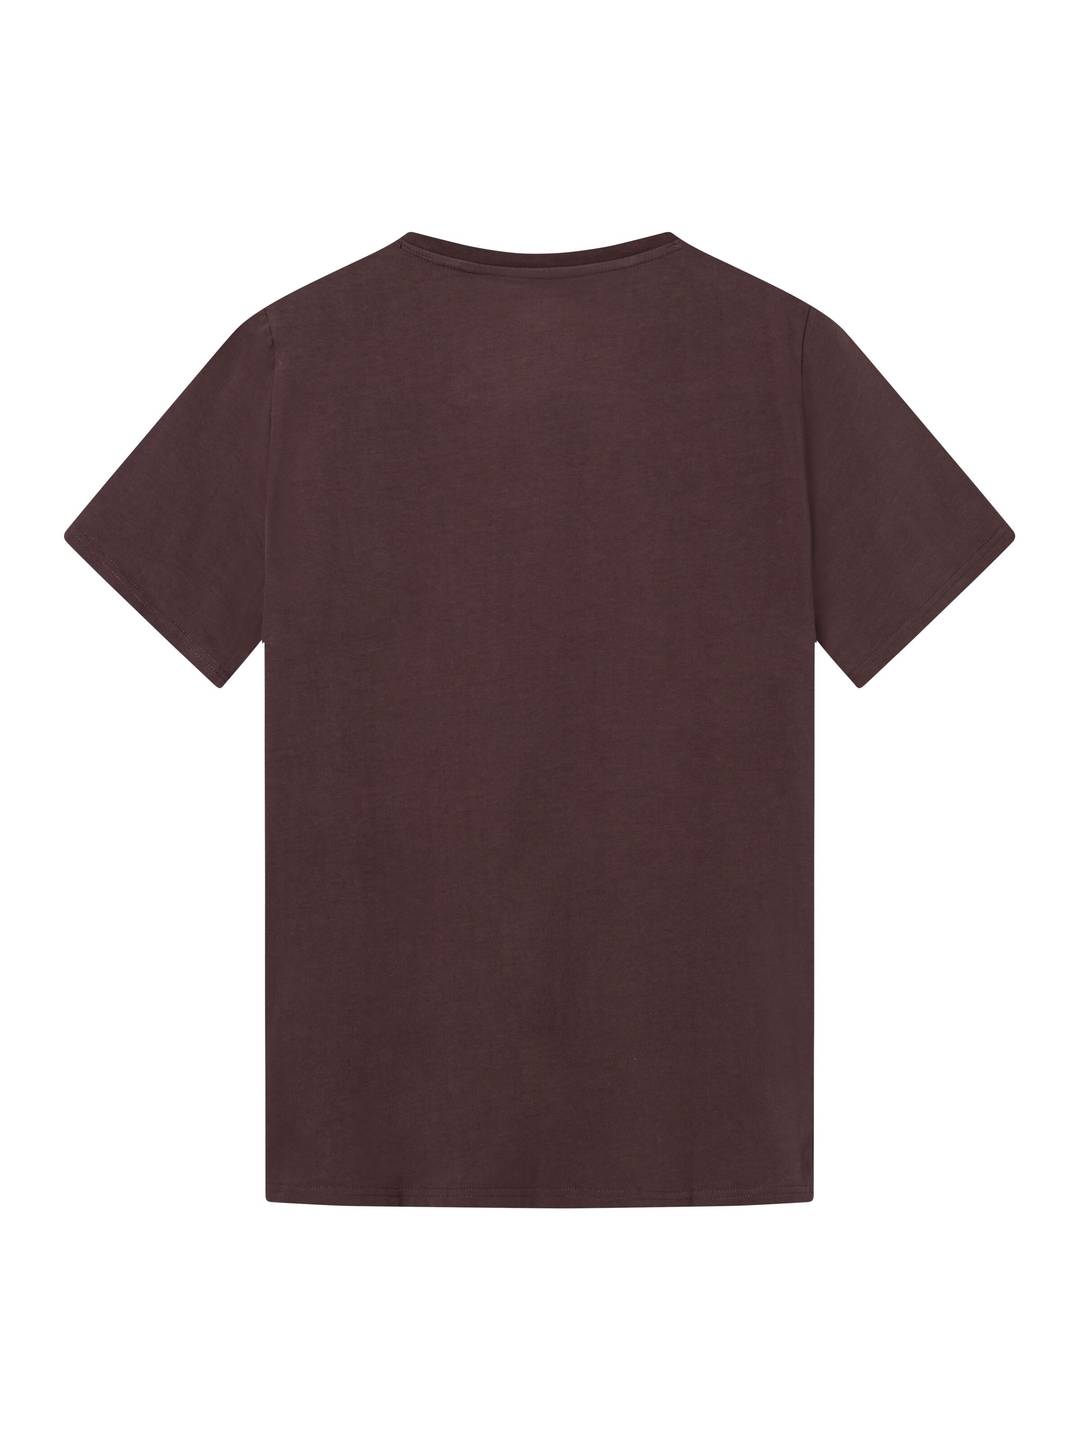 Basic T-Shirt deep mahogany von KnowledgeCotton Apparel